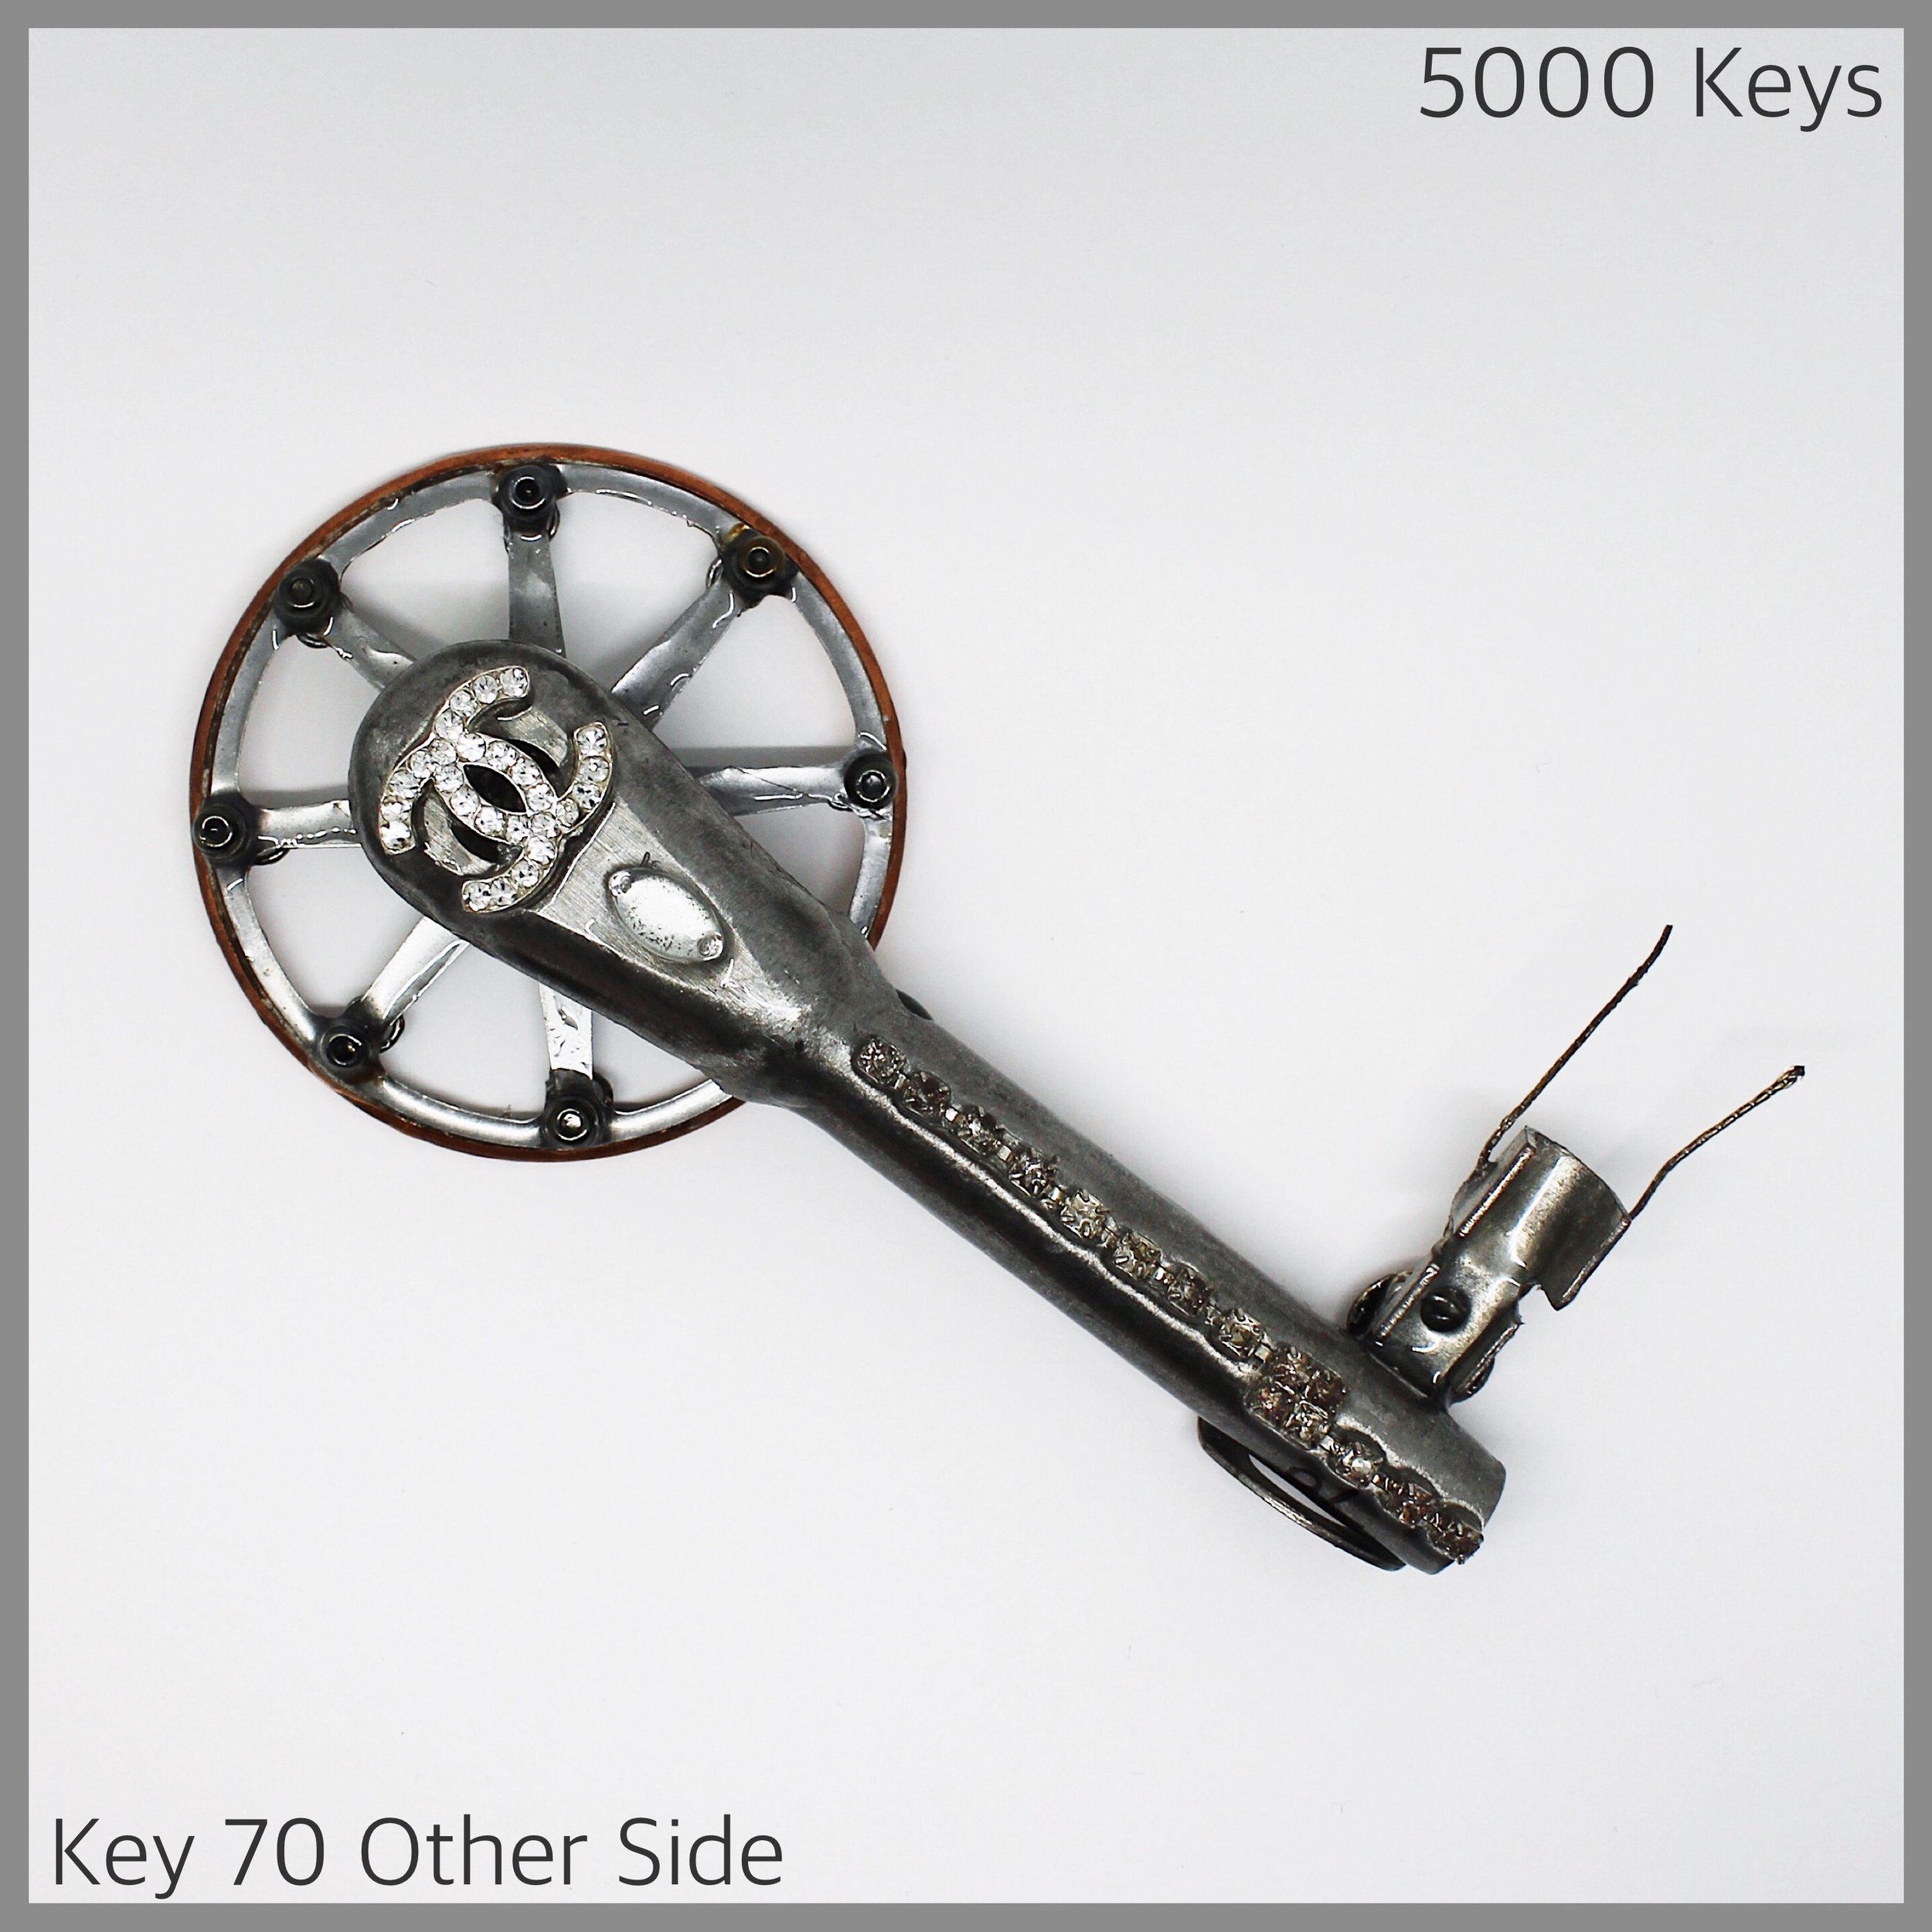 Key 70 other side - 1.JPG